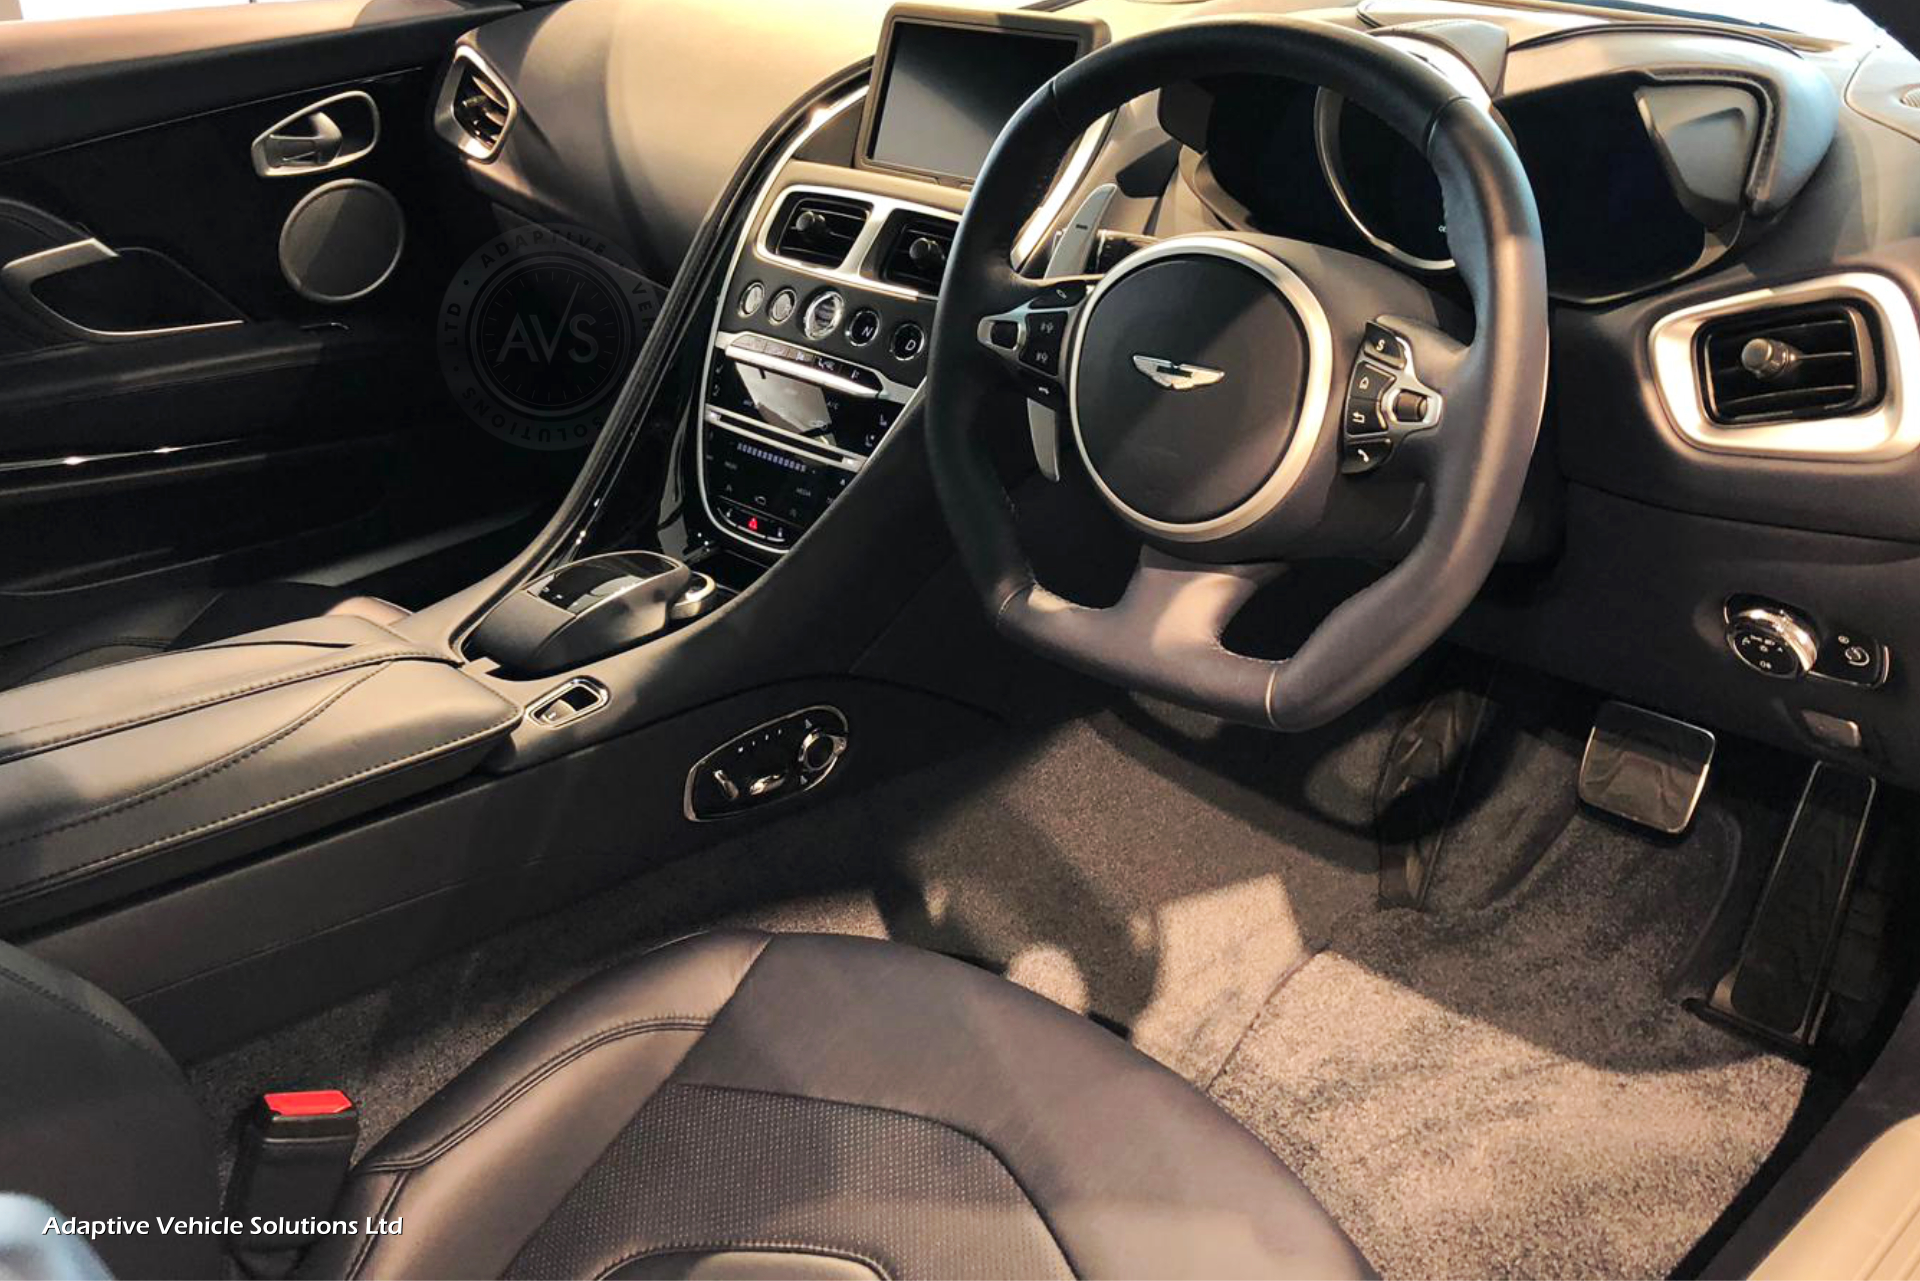 2020 Aston Martin DBS Superleggera dashboard interior, performance cars